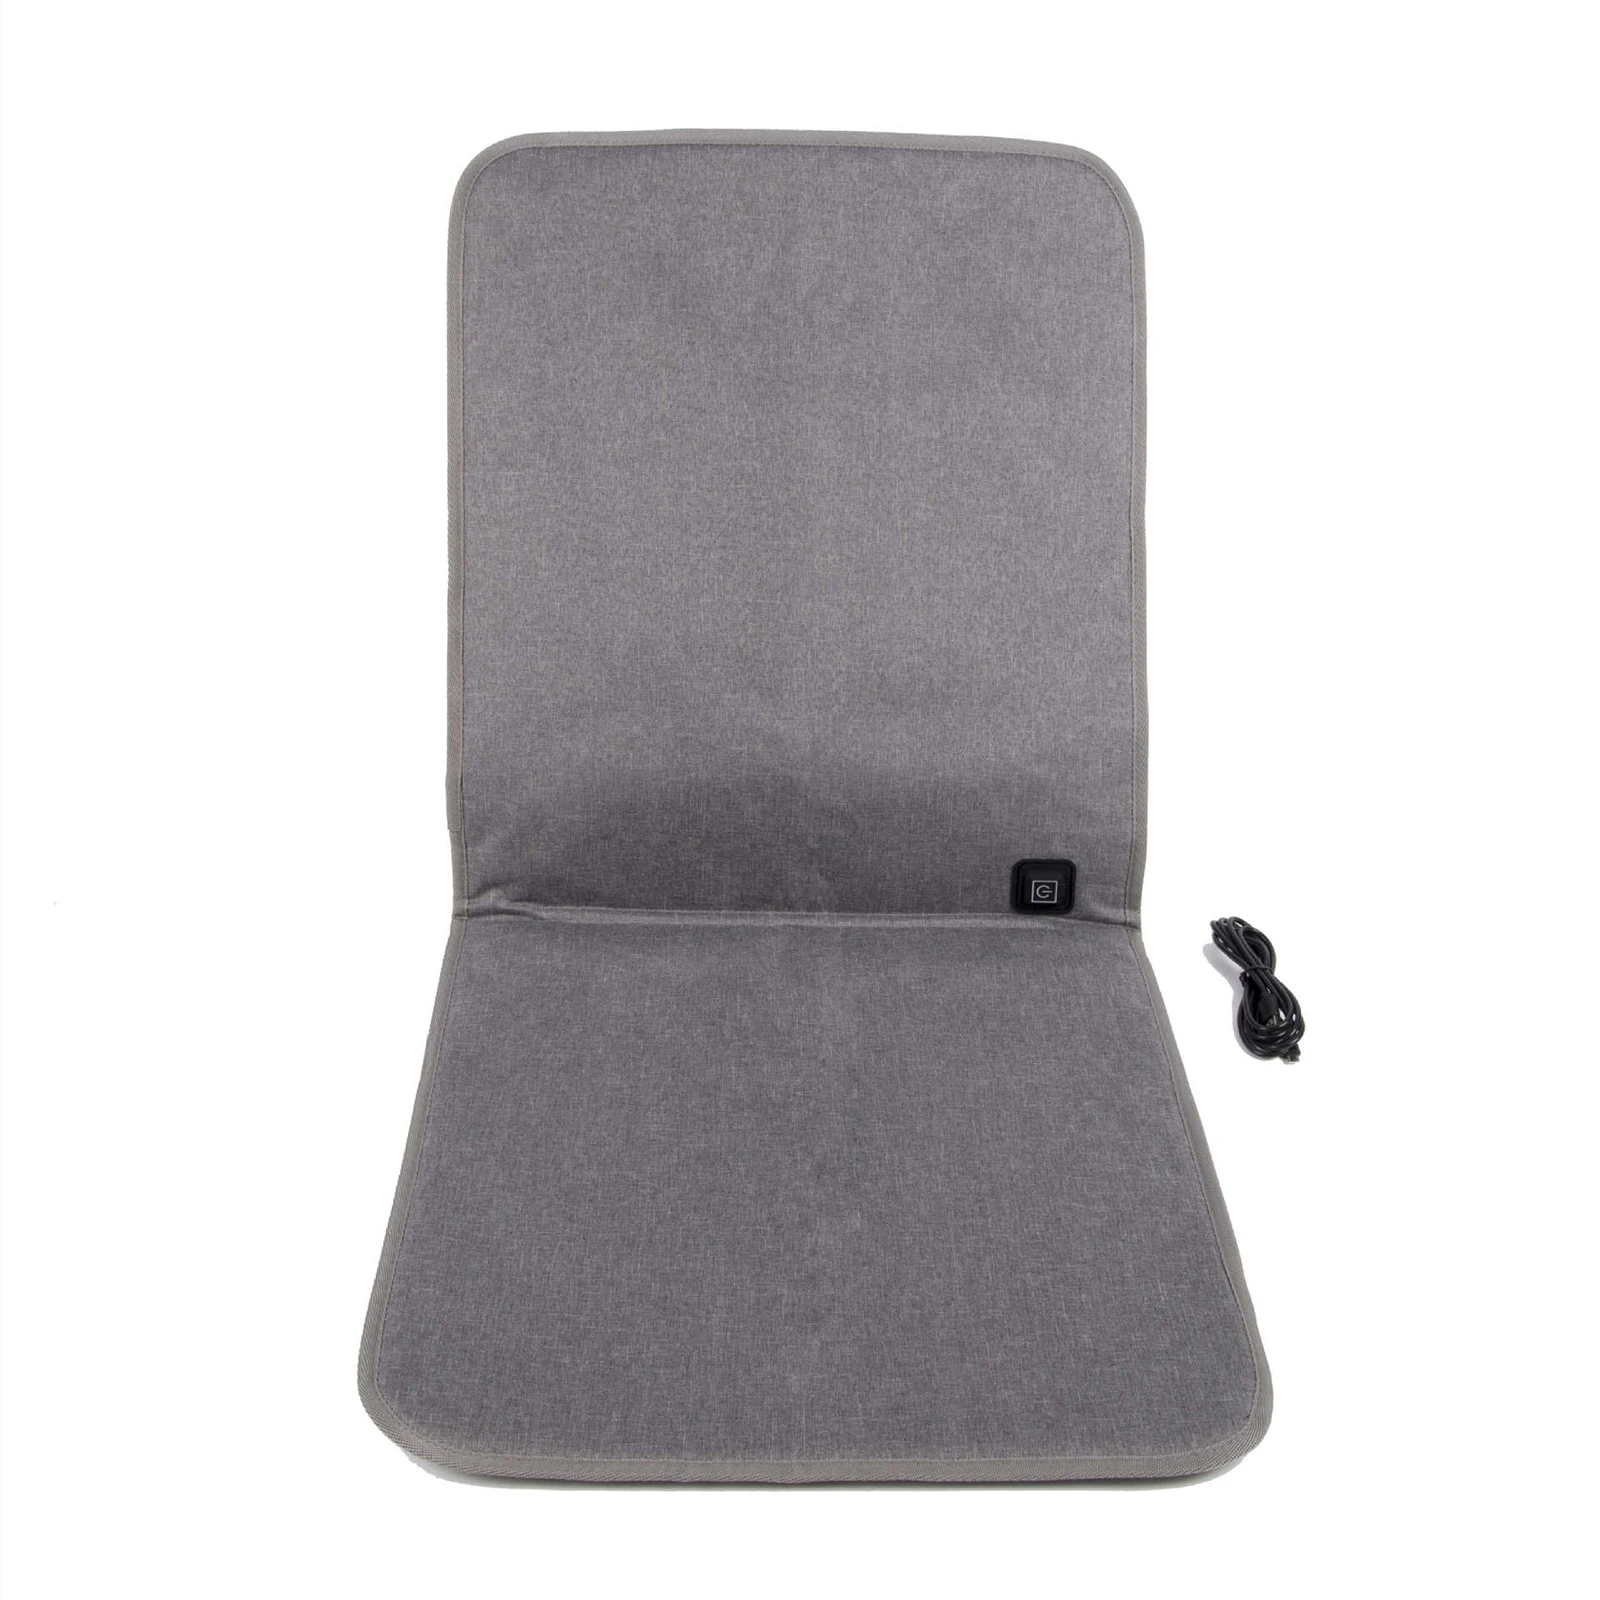 https://ae01.alicdn.com/kf/S1dfeace684964aedadab8256fc6214d4y/USB-Heated-Seat-Cushion-3-Level-Office-School-Outdoor-Car-Chair-Cushion-Energy-Saving-Heating-Pet.jpg